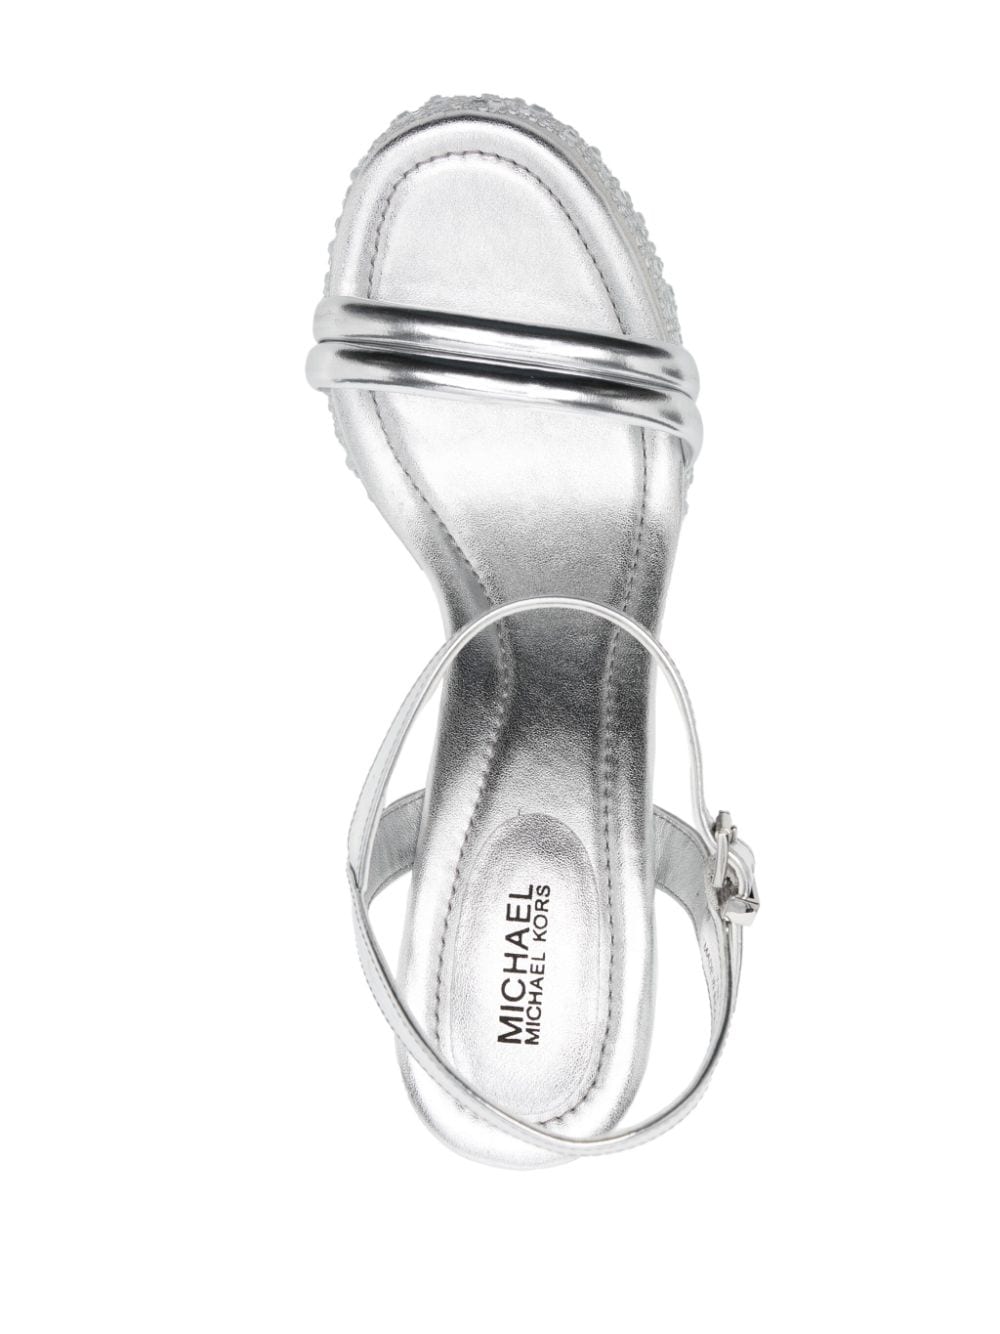 Shop Michael Kors Laci 110mm Metallic Platform Sandals In Silver